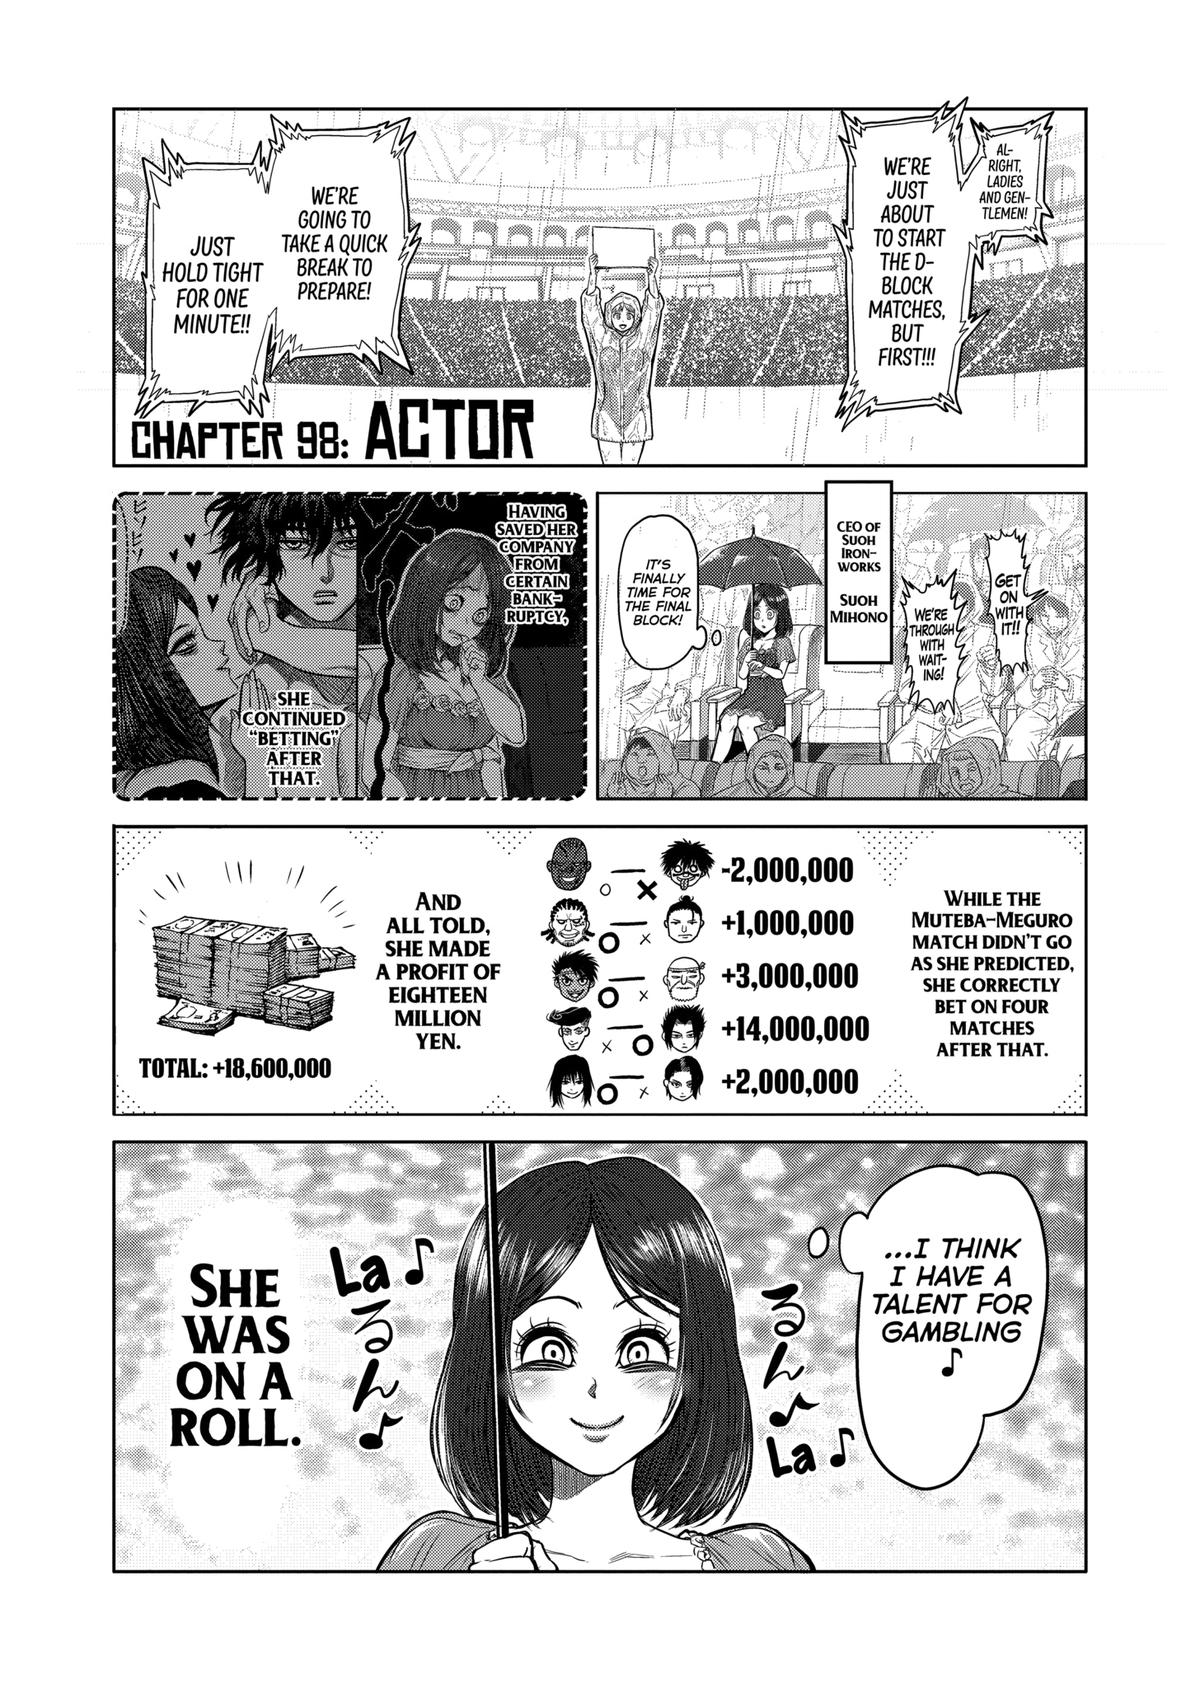 Oshi no Ko (YOKOYARI Mengo), Chapter 39  TcbScans Net - TCBscans - Free  Manga Online in High Quality